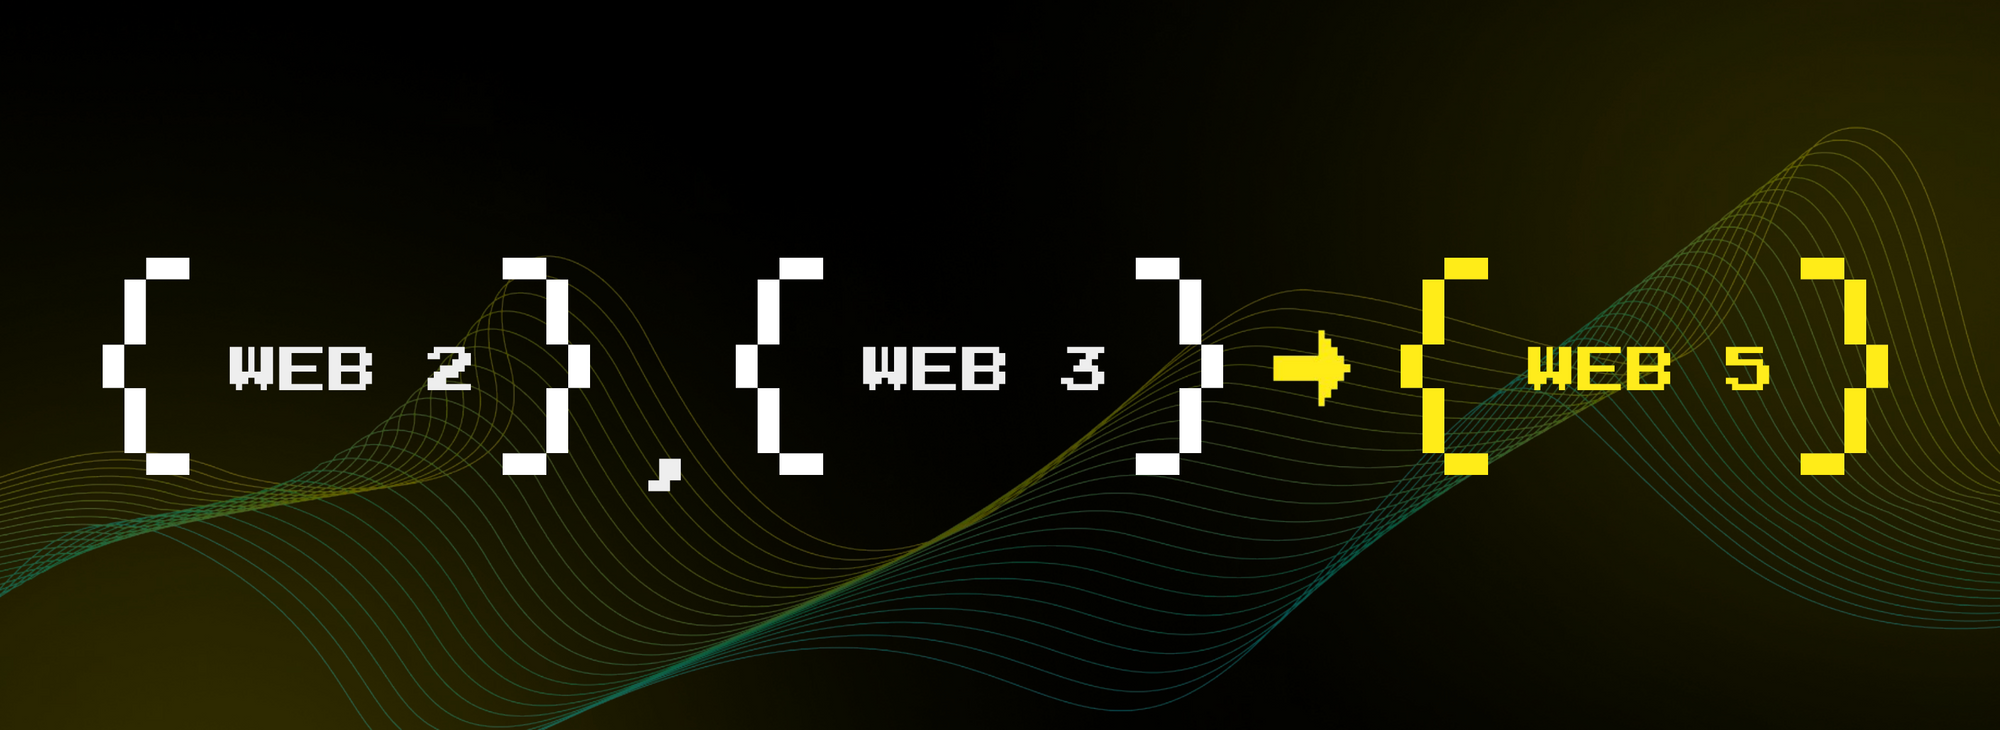 Web5 Impact